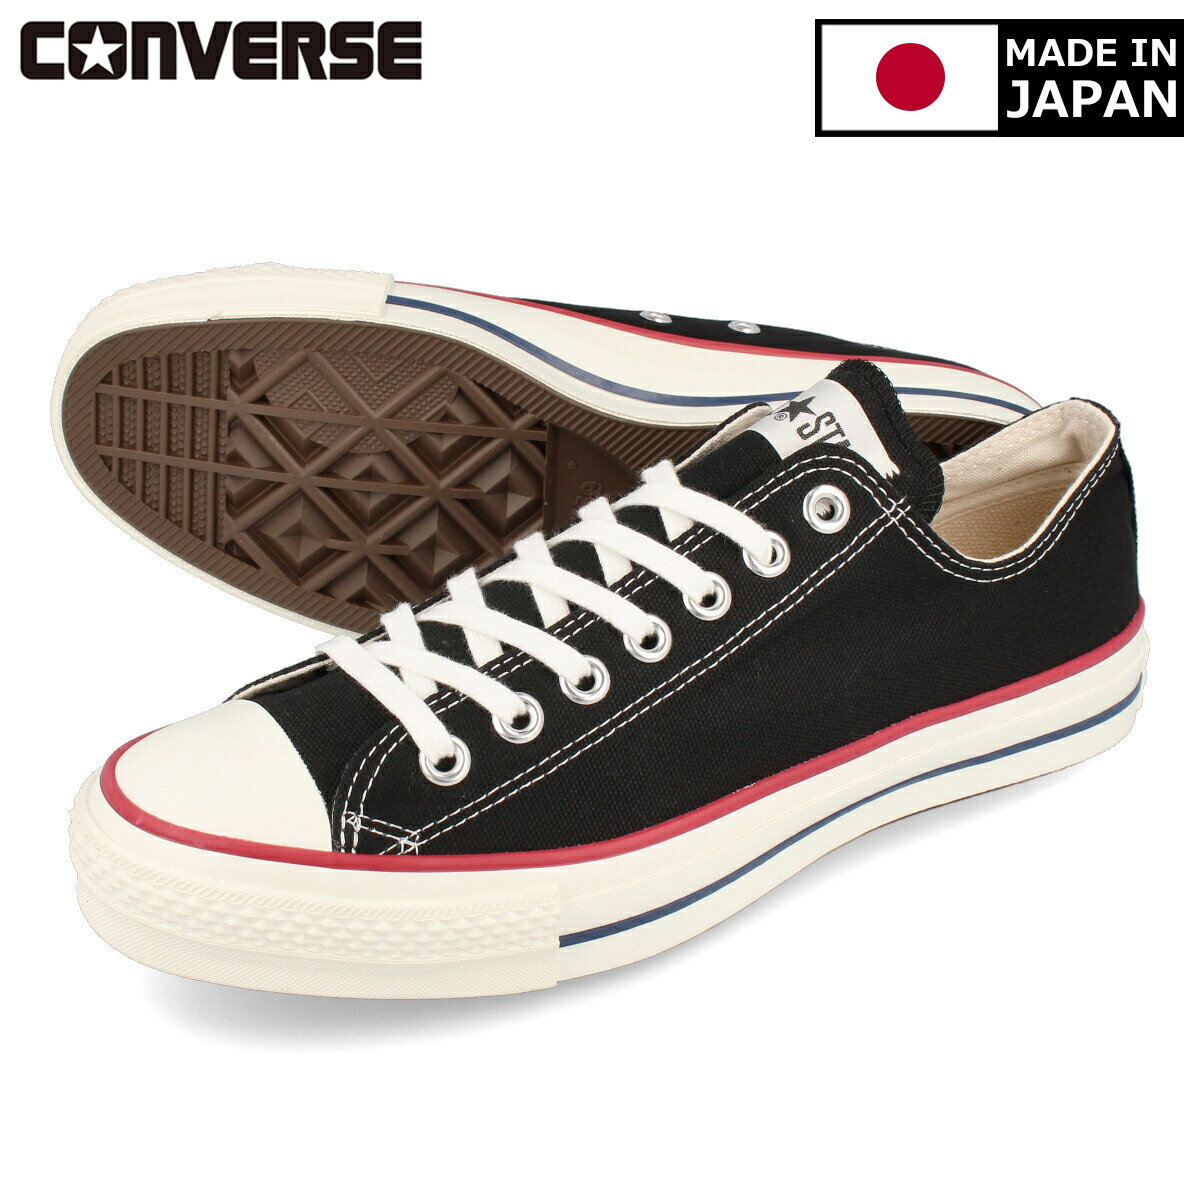 CONVERSE CANVAS ALL STAR J OX 【MADE IN JAPAN】【日本製】 コンバース キャンバス オールスター J OX BLACK/TRICO 31304300